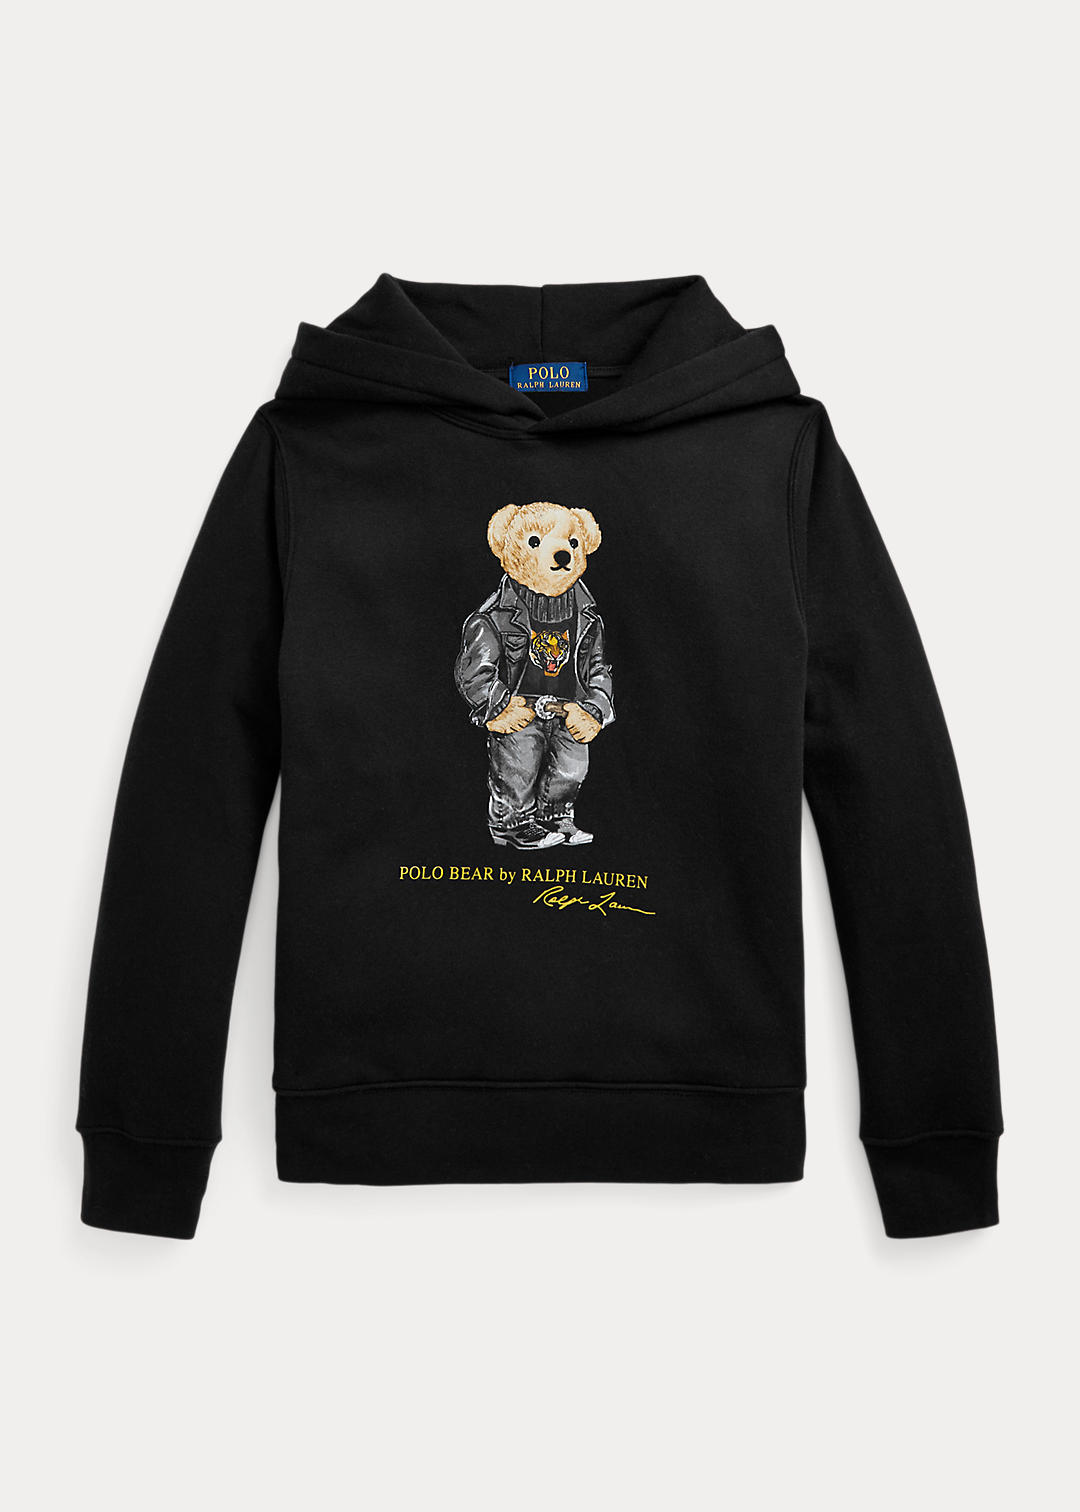 Toddler Kids Boys Girls Bear Print Hooded Pullover T-shirt Tops+Pants Outfits UK